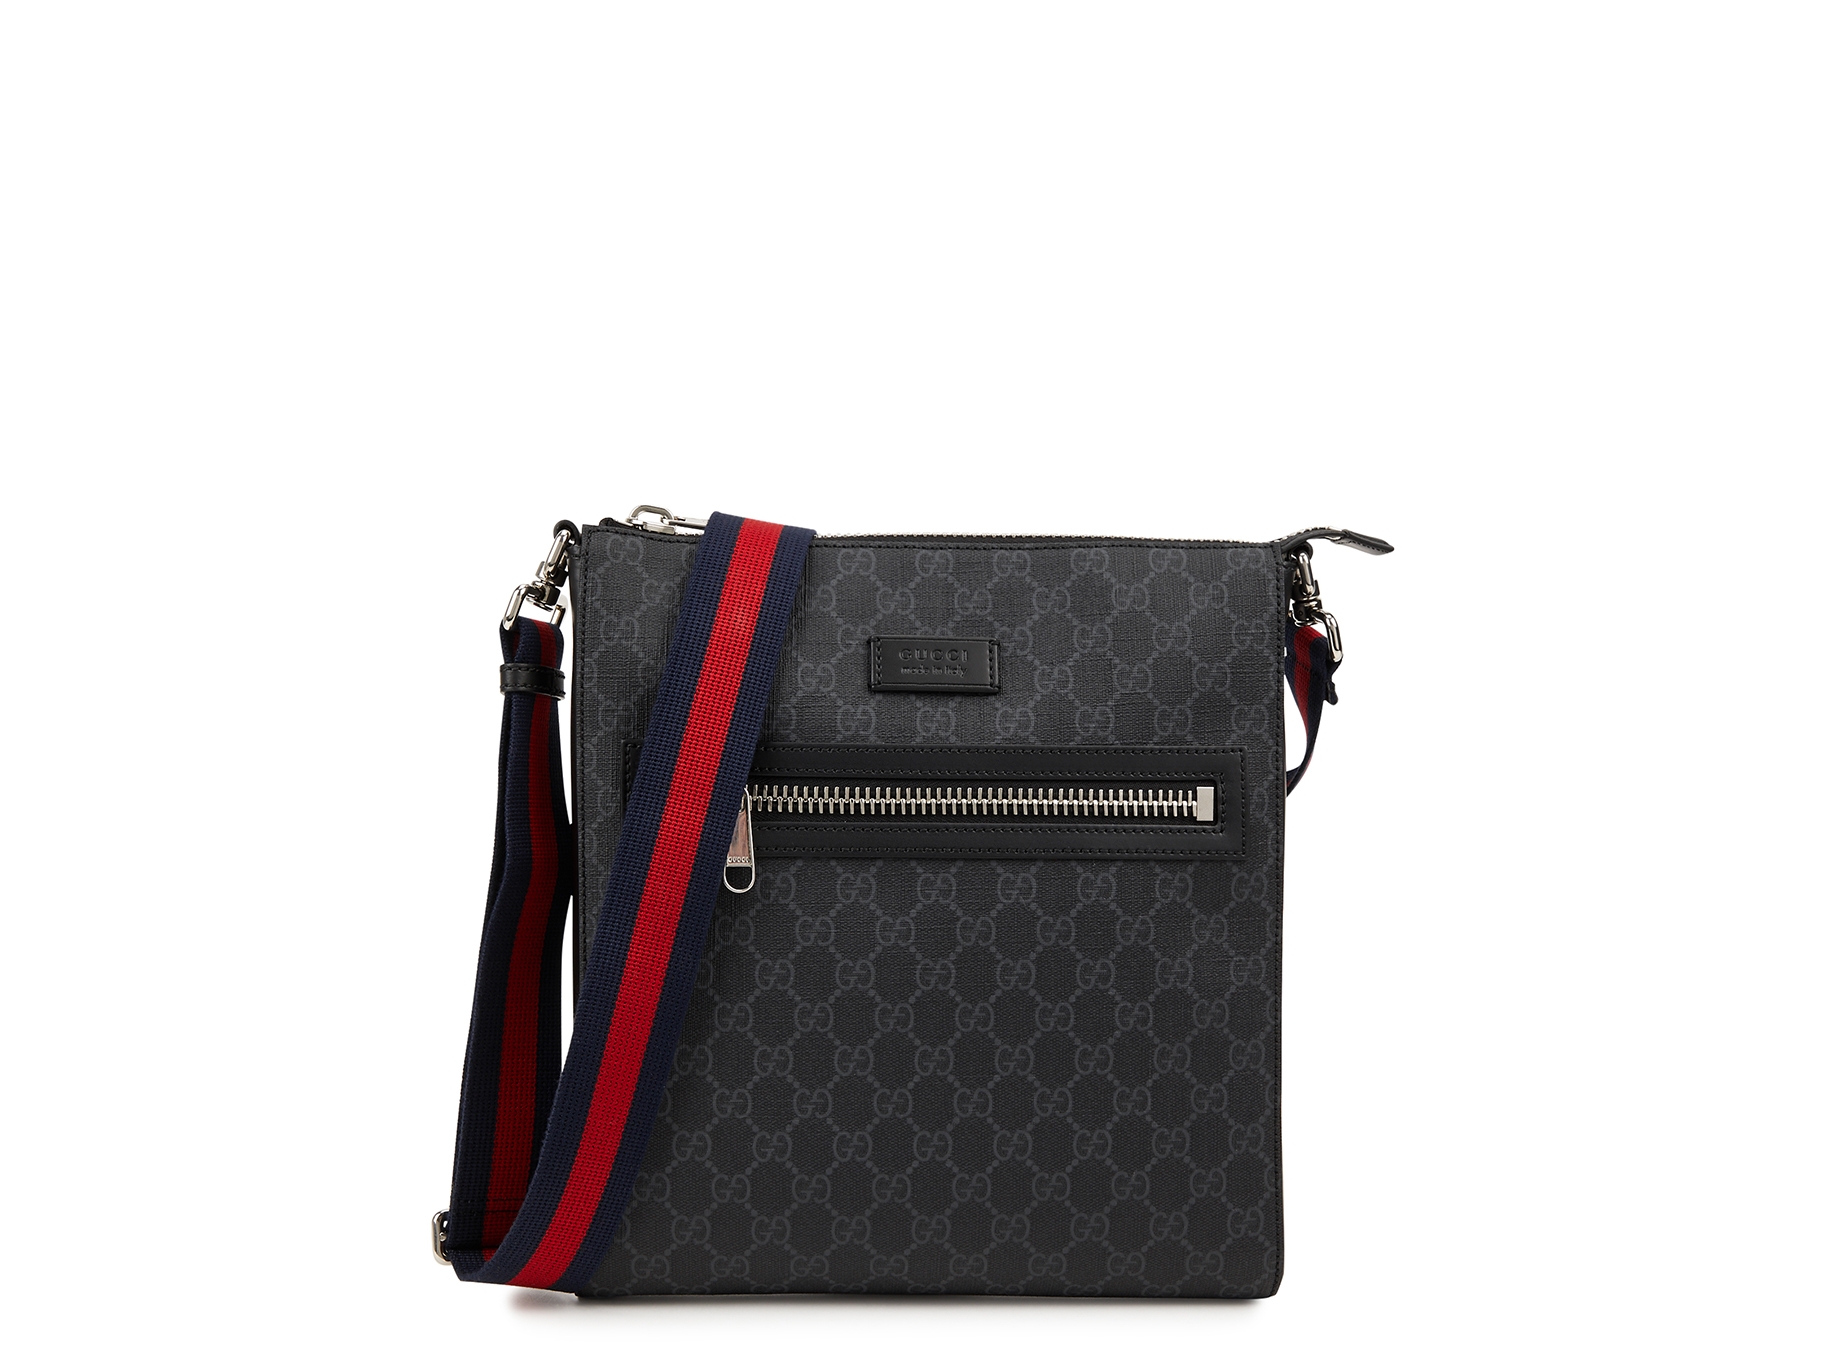 Gucci GG monogrammed cross-body bag - Harvey Nichols